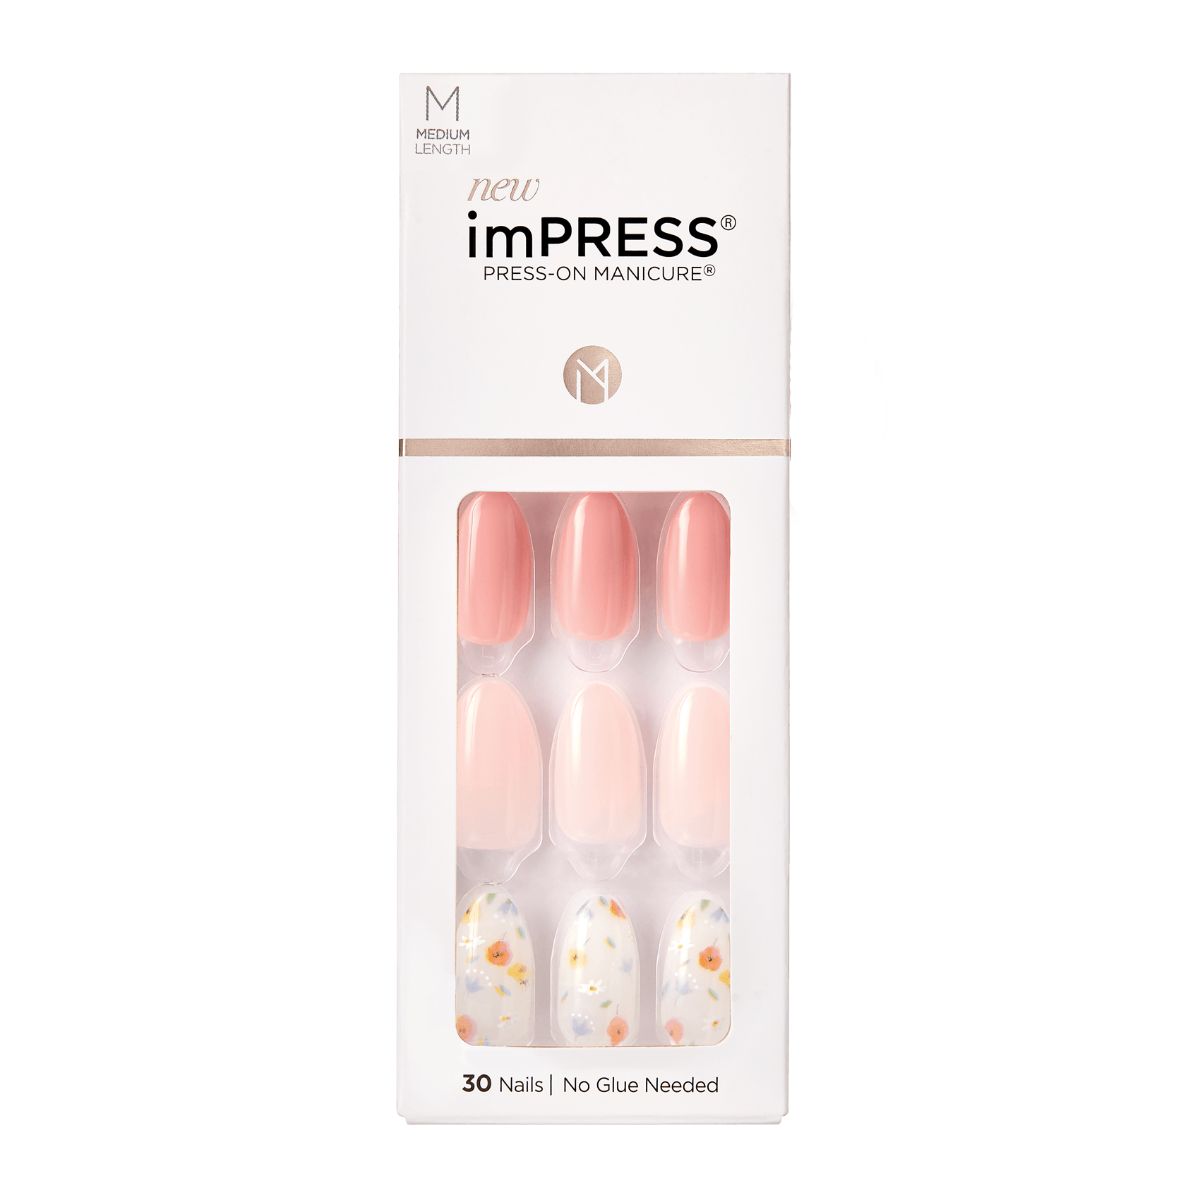 imPRESS Press-on Manicure | KISS, imPRESS, JOAH